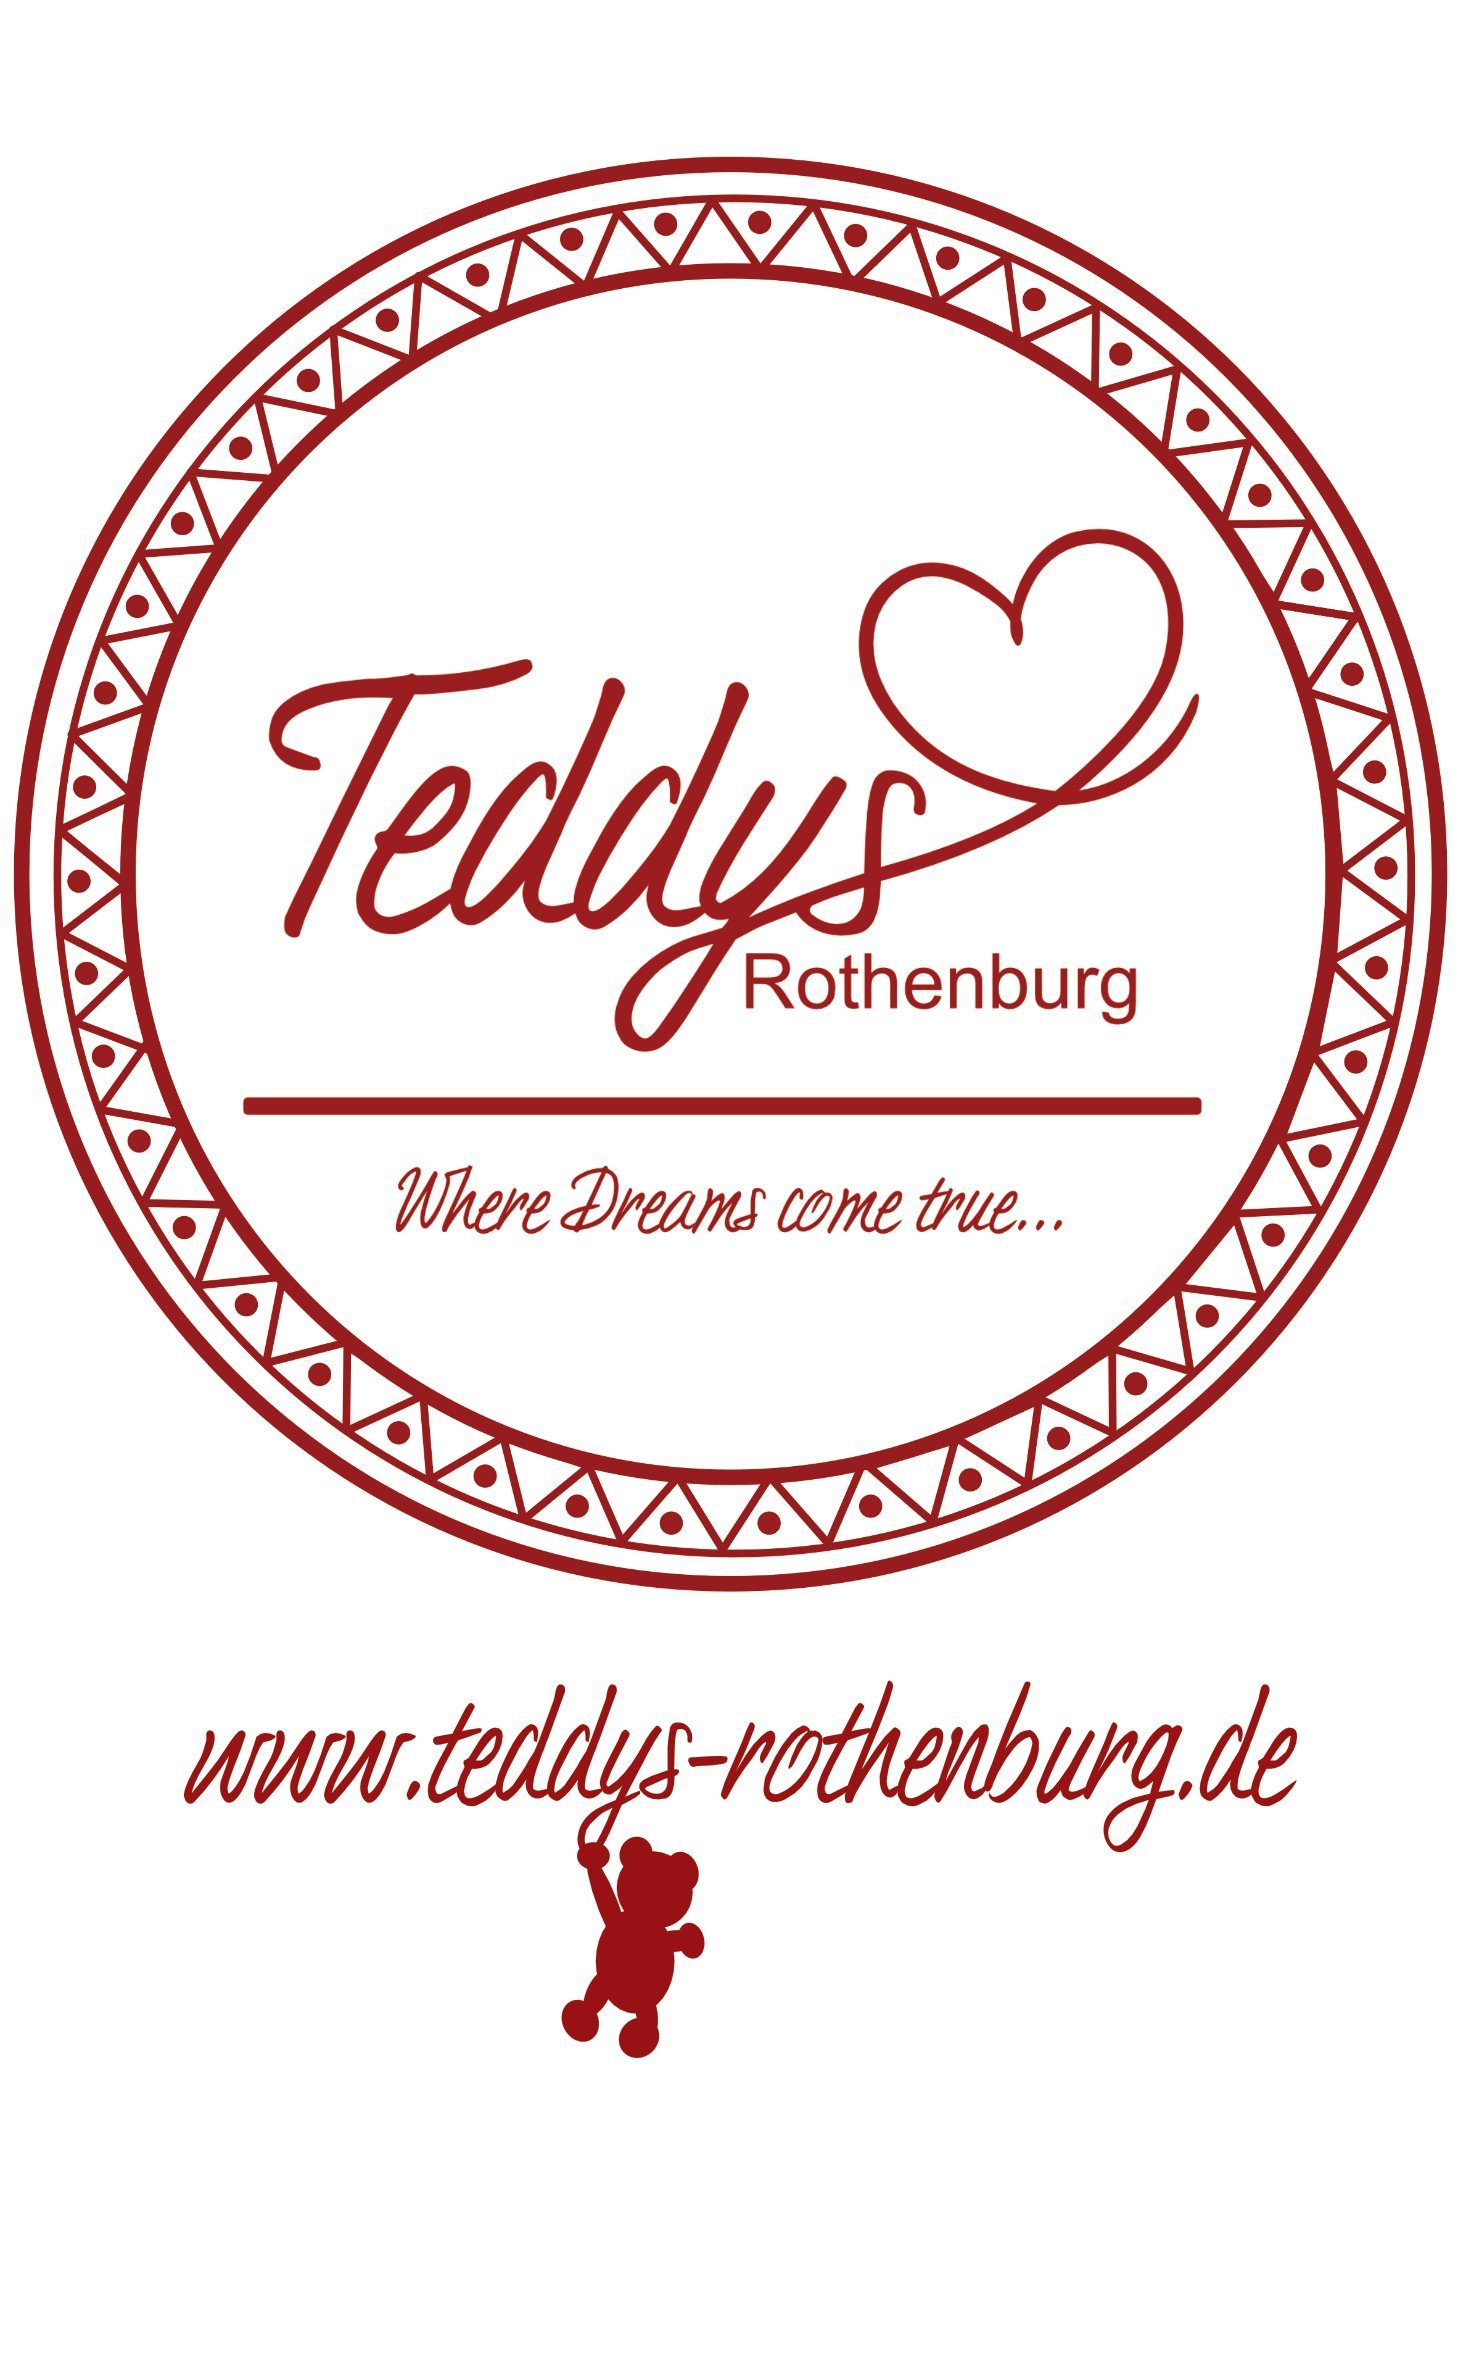 Teddys Rothenburg